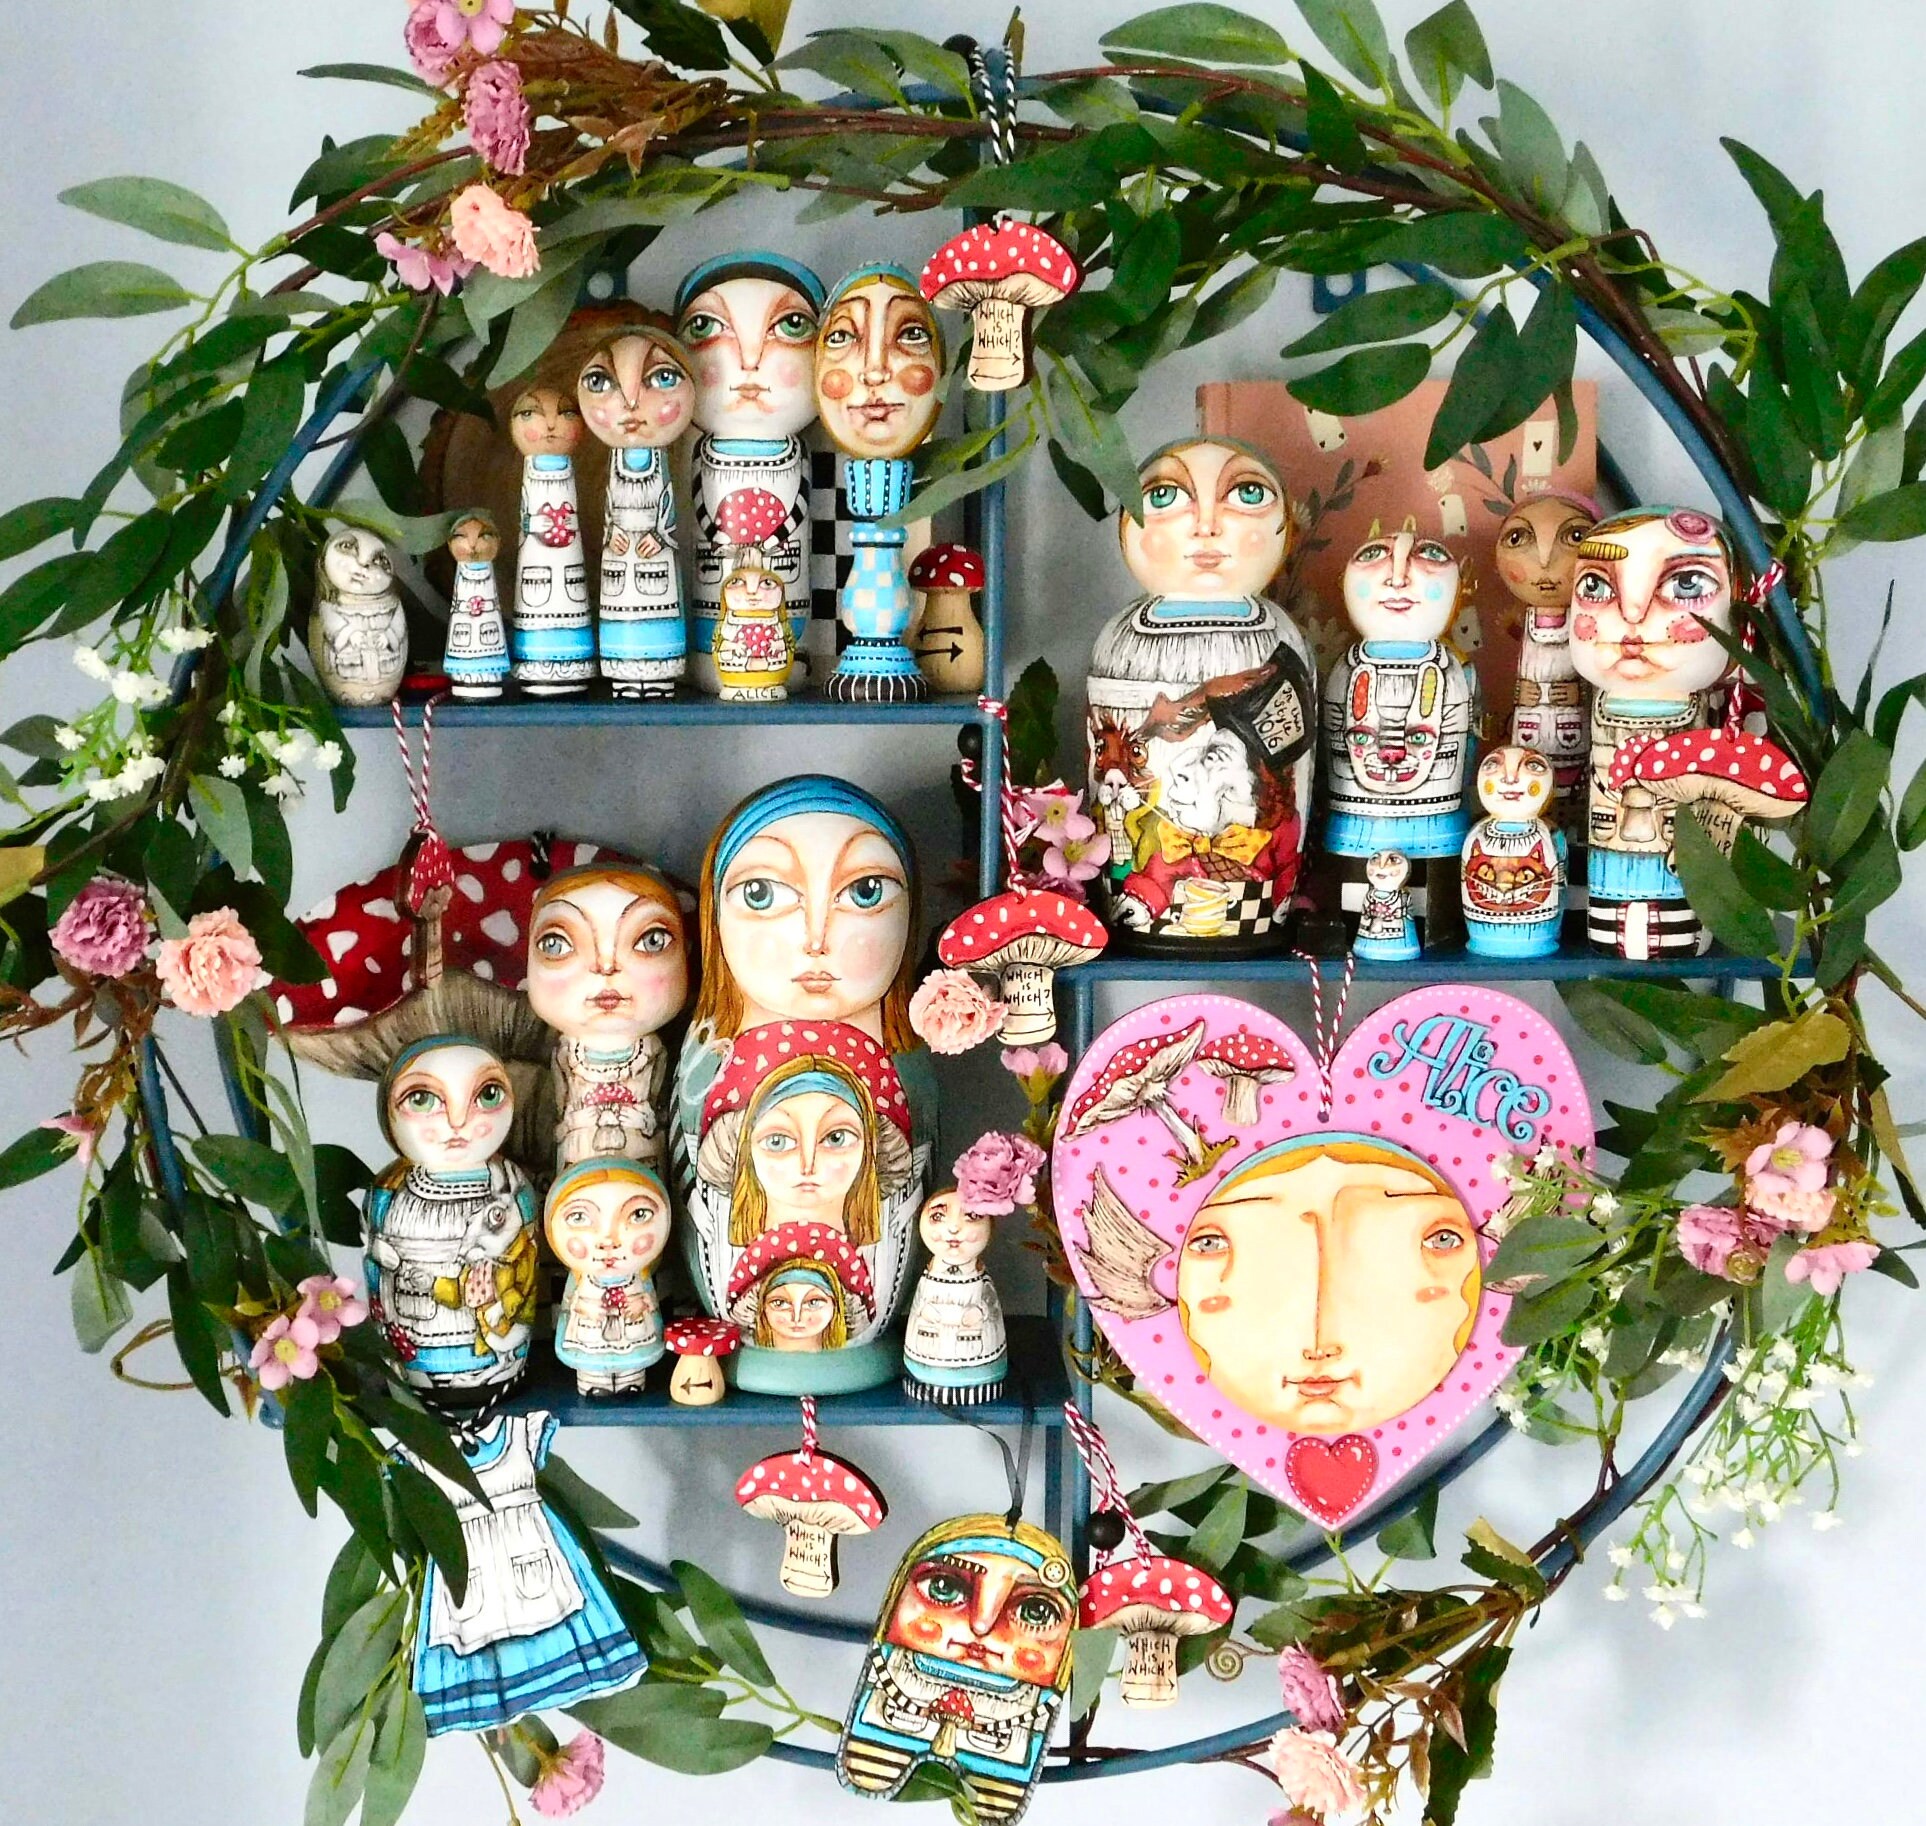 Alice in Wonderland Nesting Dolls Set of 5 Pcs - Matryoshka with Alice in Wonderland Figurines - Alice in Wonderland Decor - Alice in Wonderland